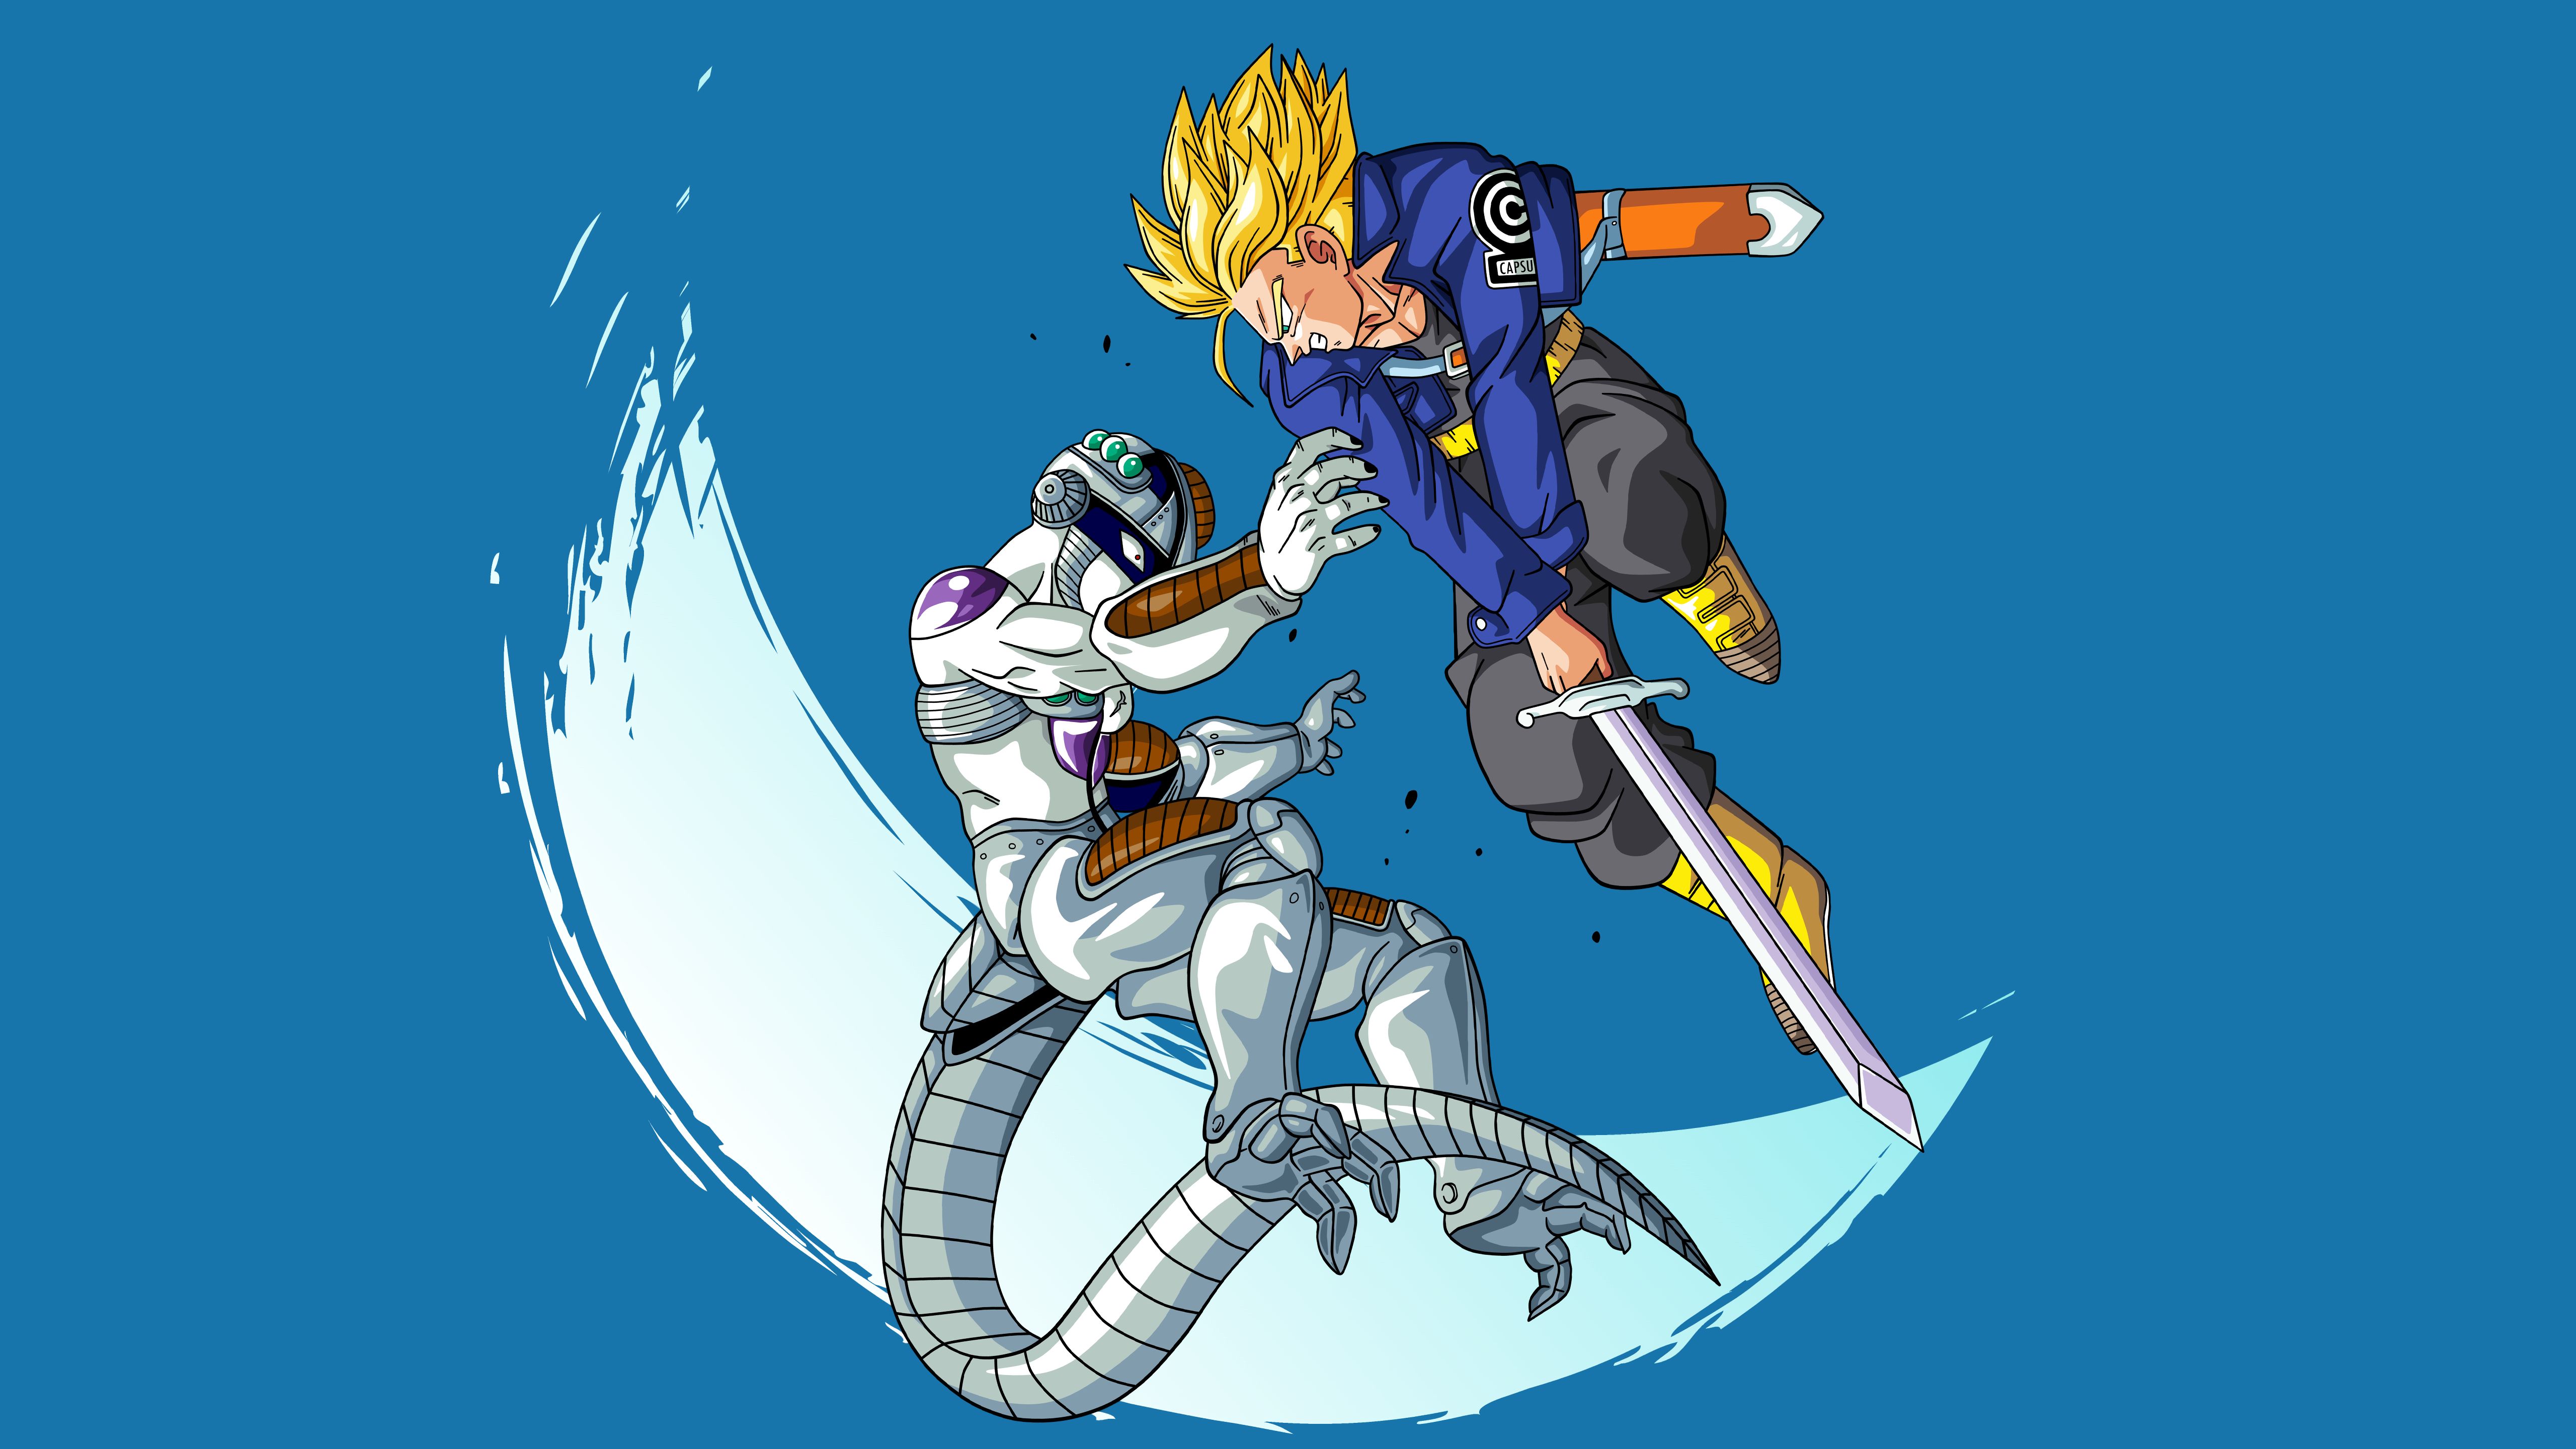 Freeza vs Trunks Dragon Ball Wallpaper, HD Games 4K Wallpaper, Image, Photo and Background